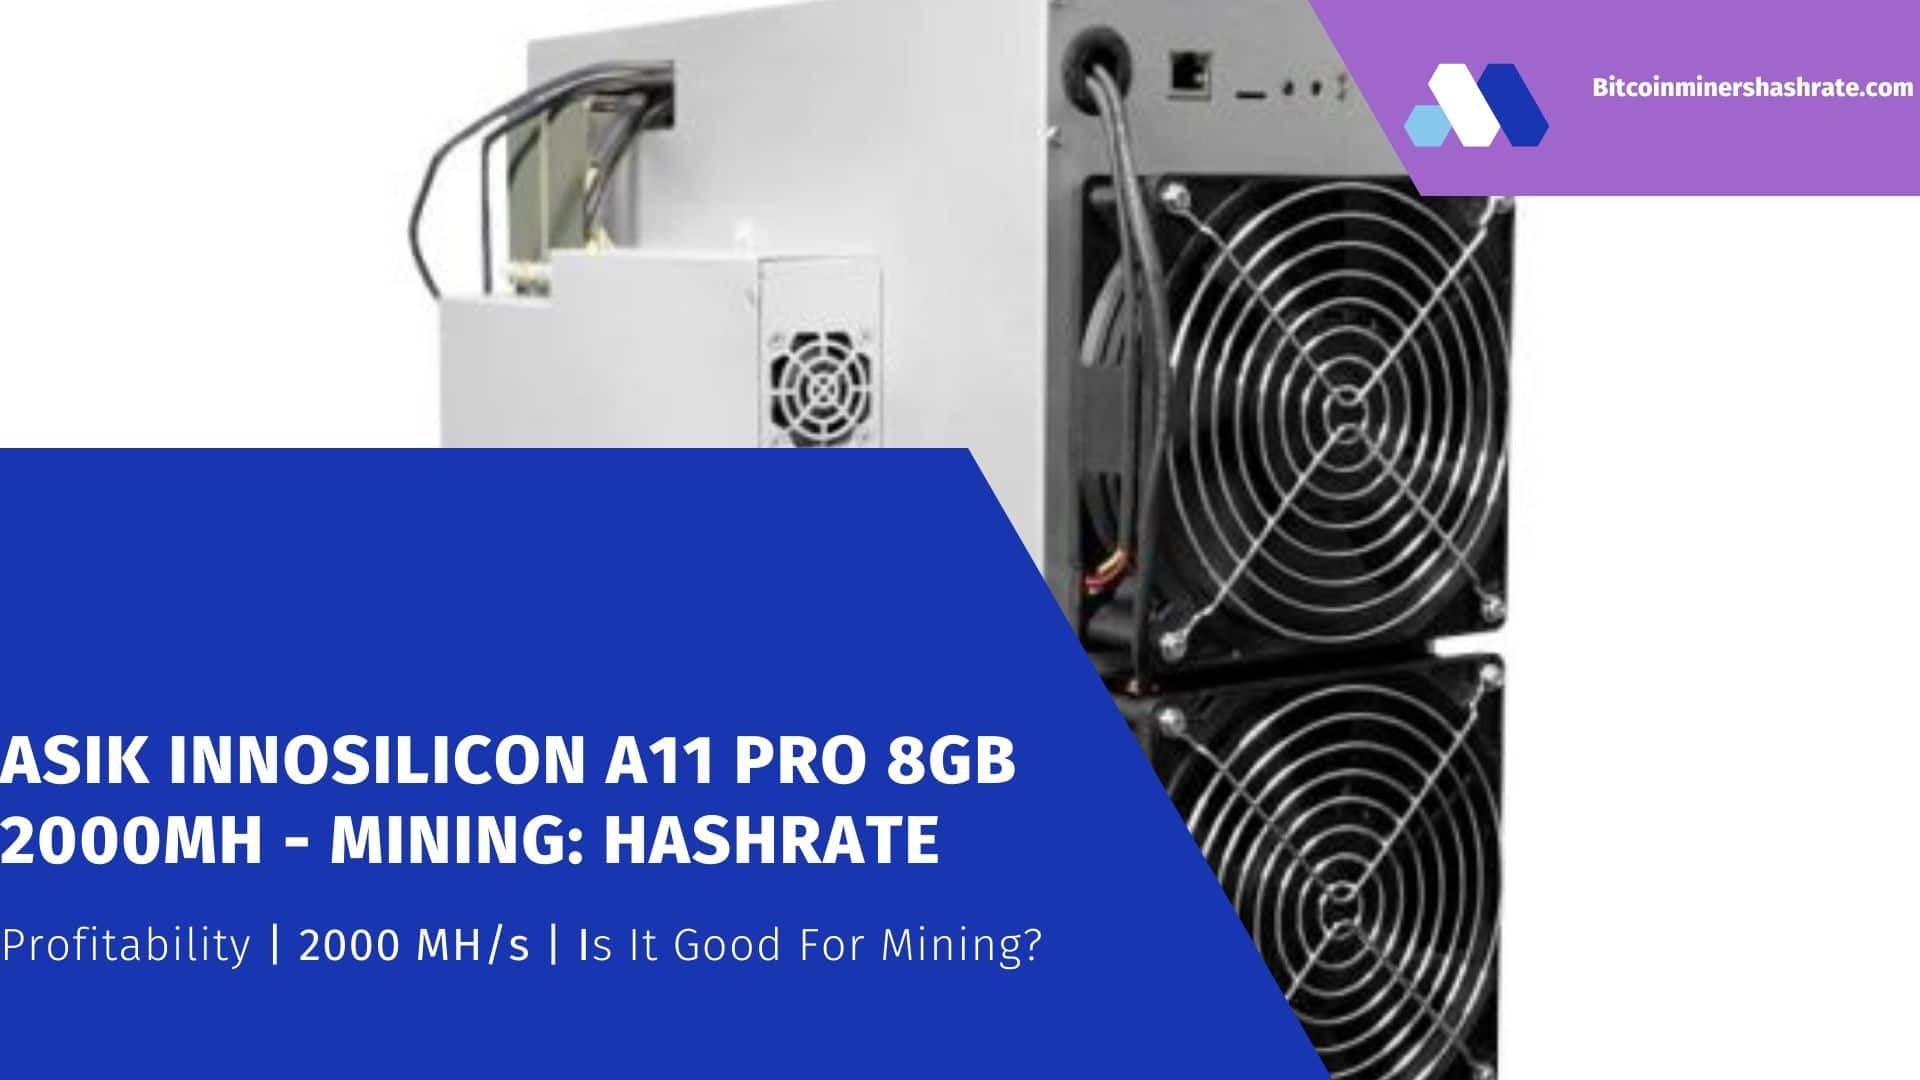 Asik Innosilicon A11 Pro Mining Hashrate